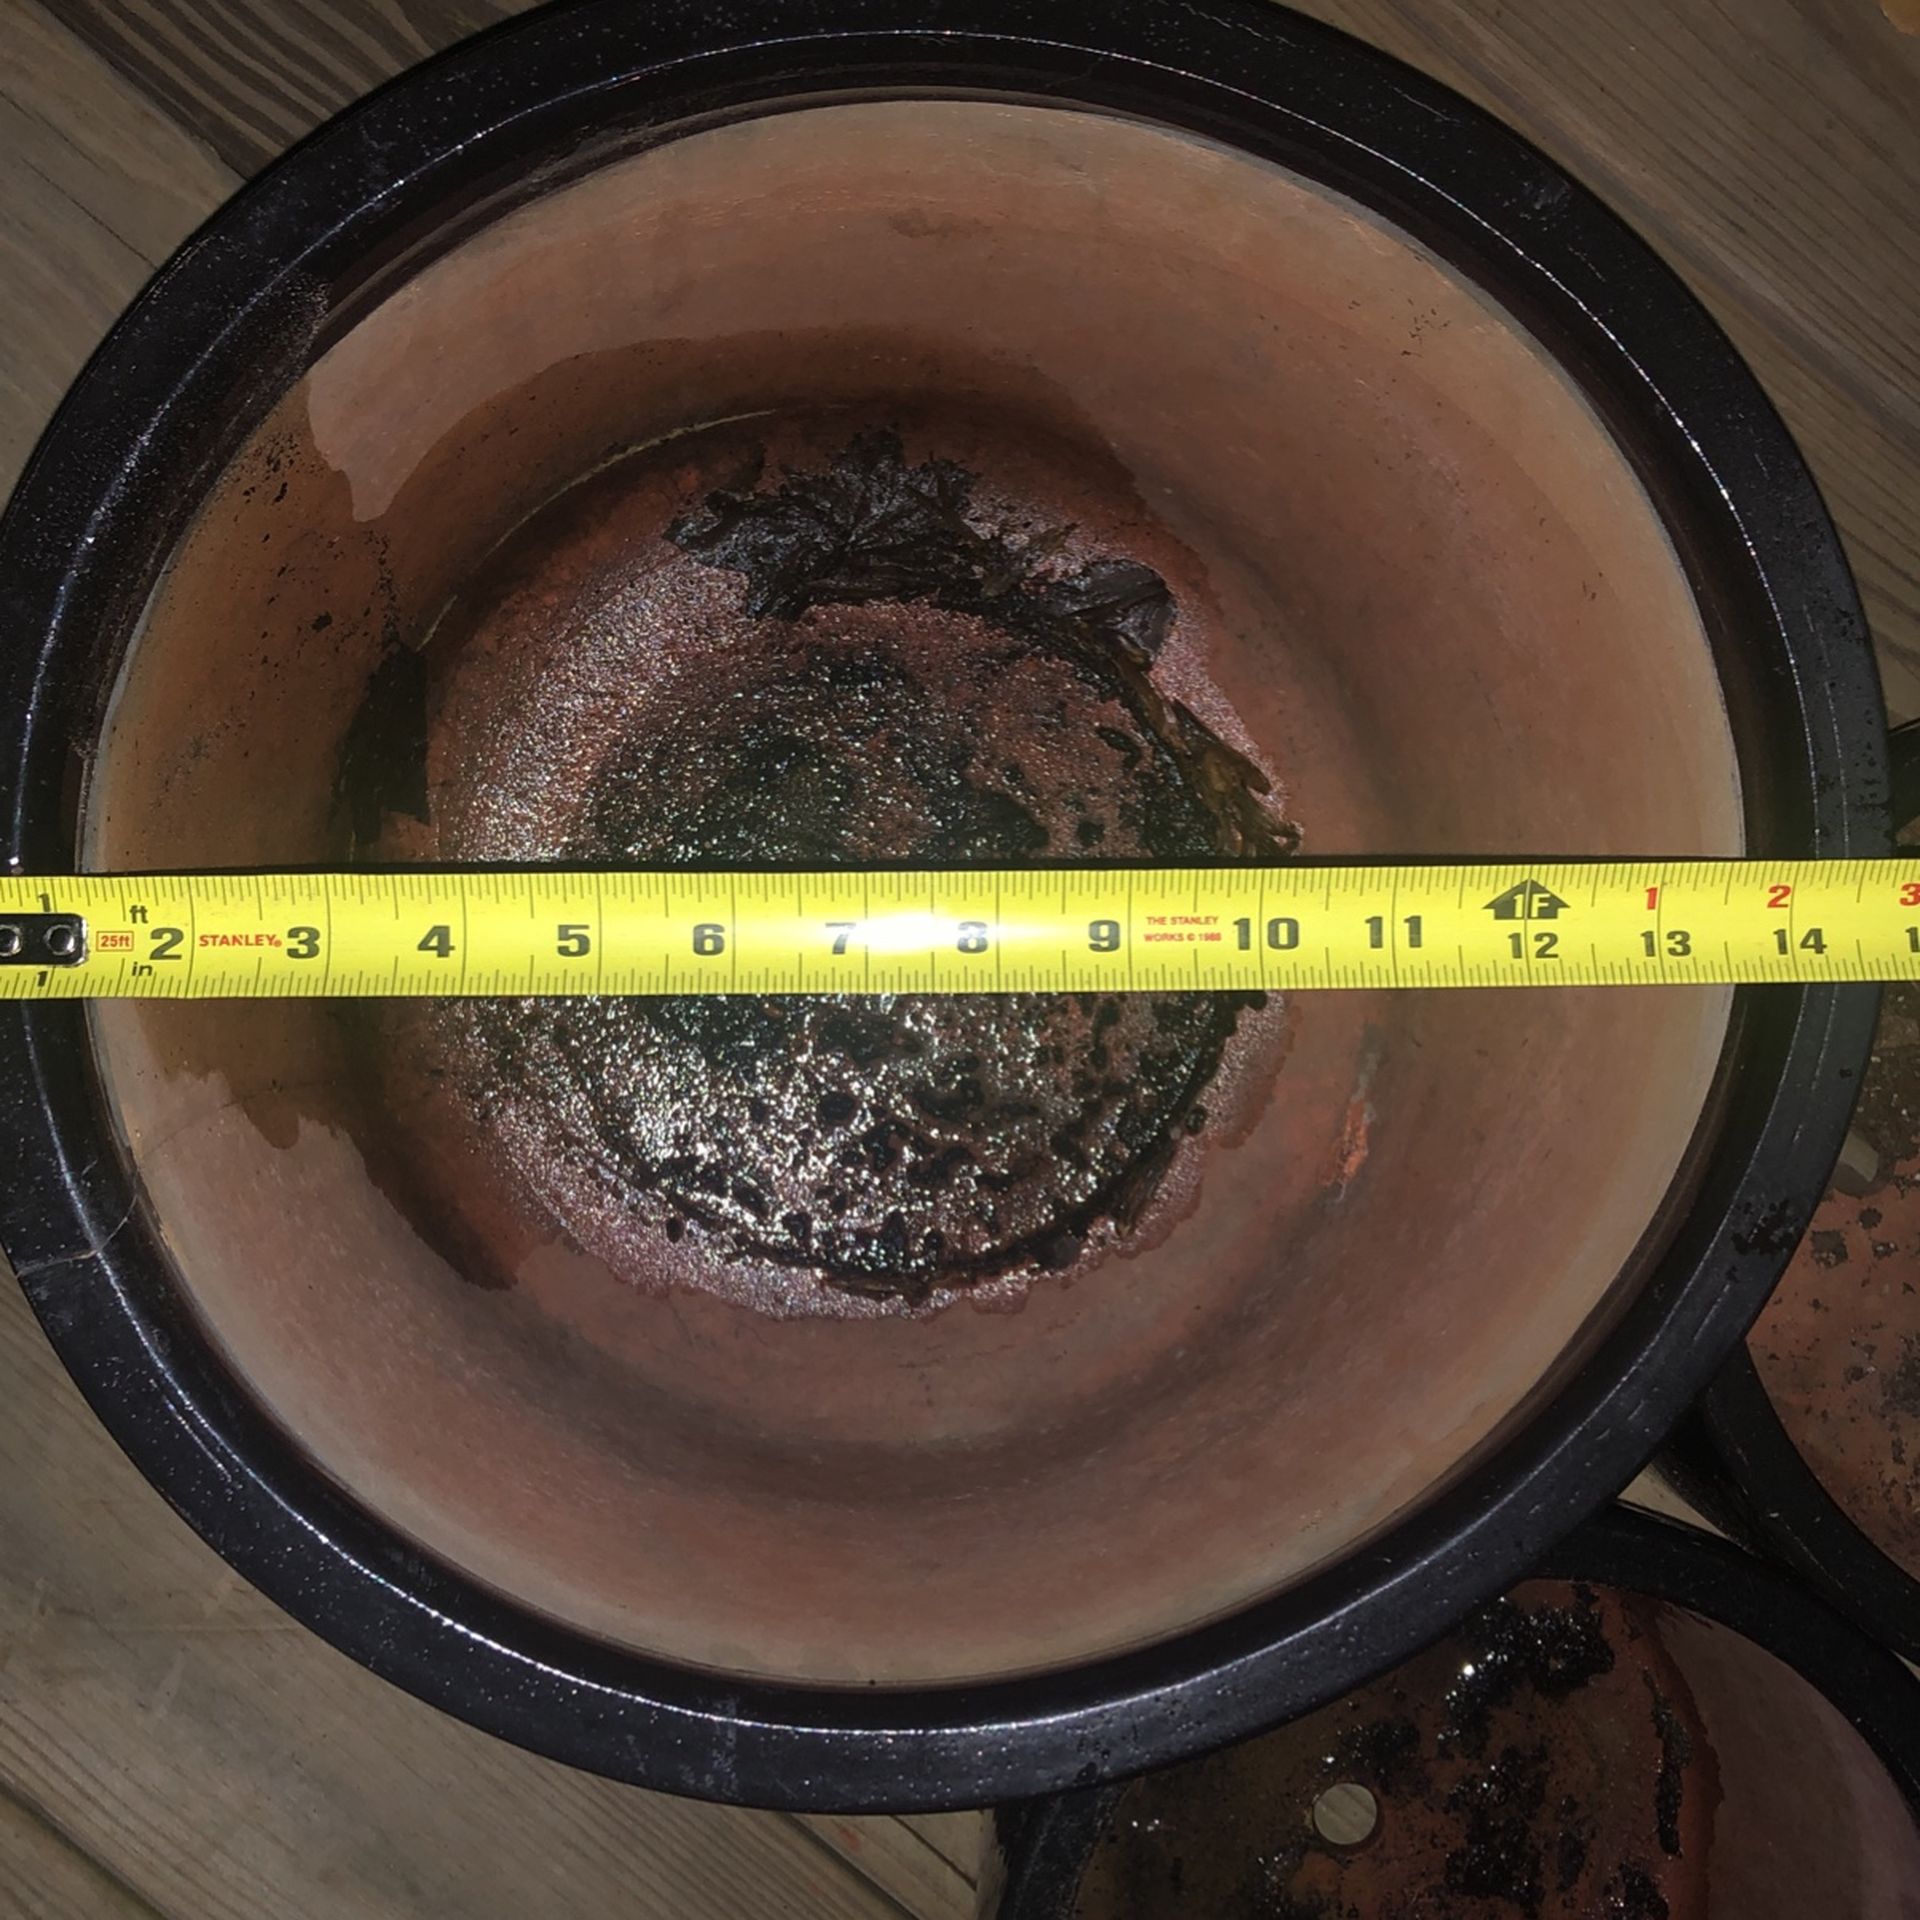 Planters/flower Pots Black (glossy)  (1) Xtra Large (2) Medium  (2) Small Pots 